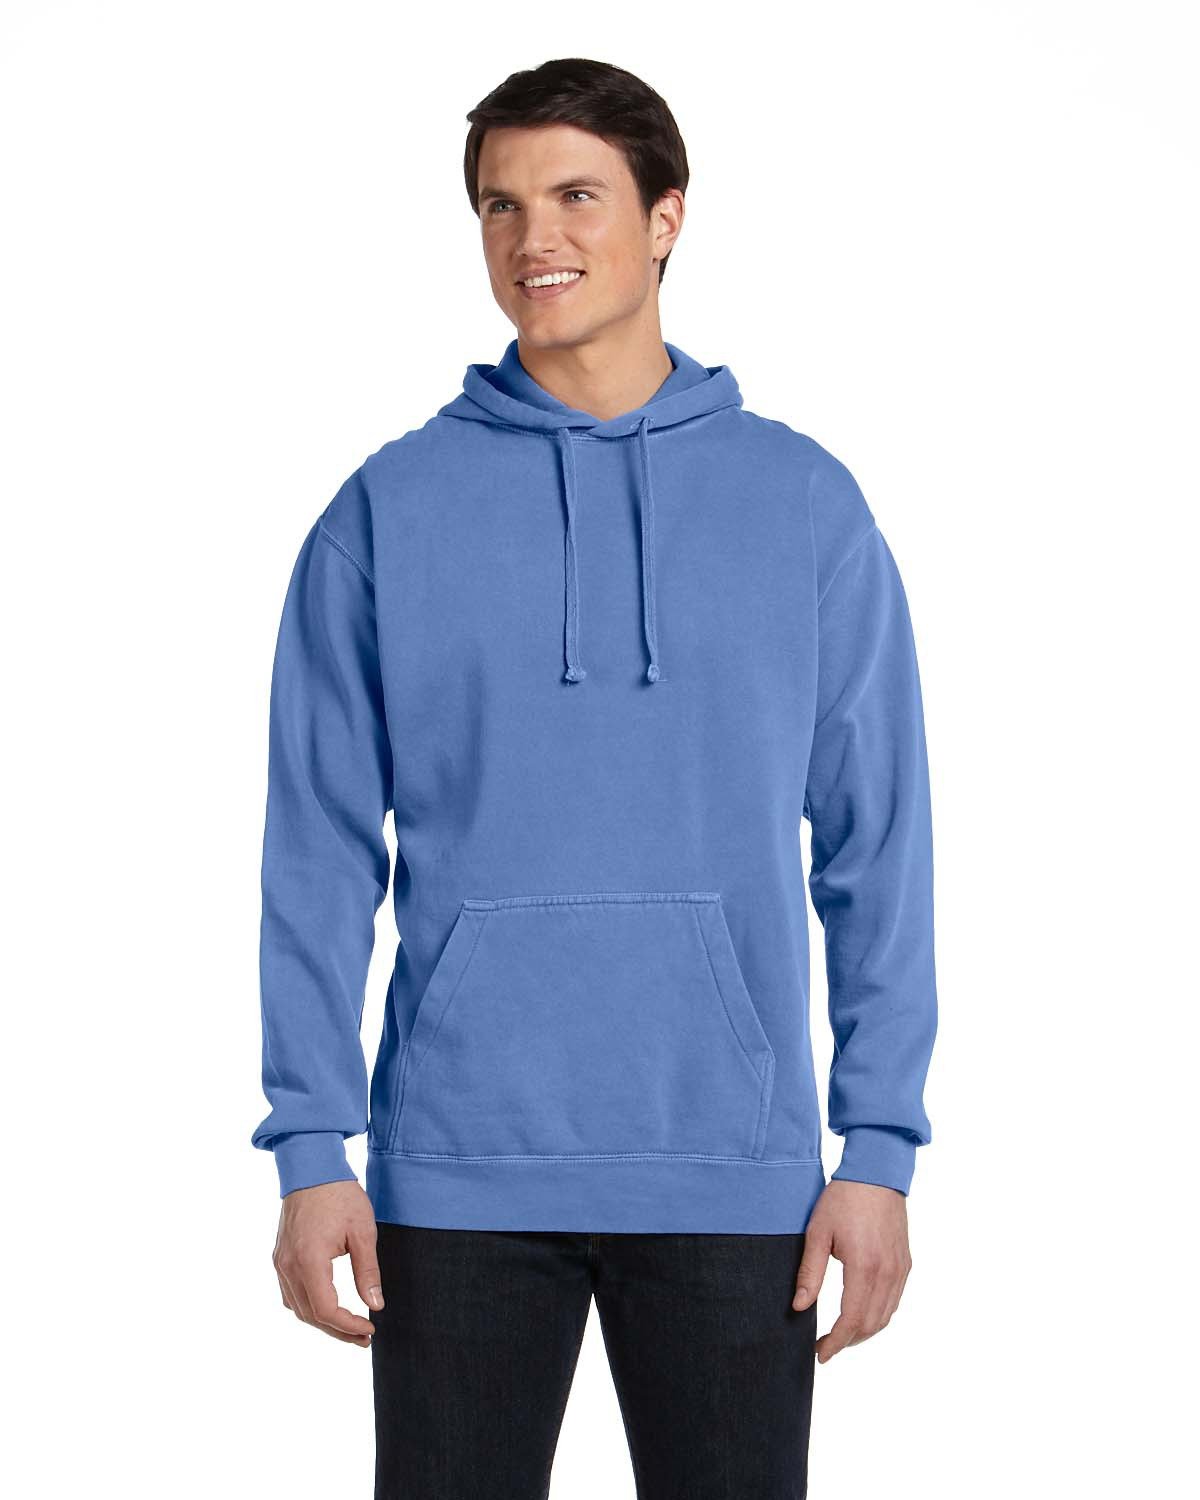 London Sweater, Comfort Colors® Brand Hooded Sweatshirt, London